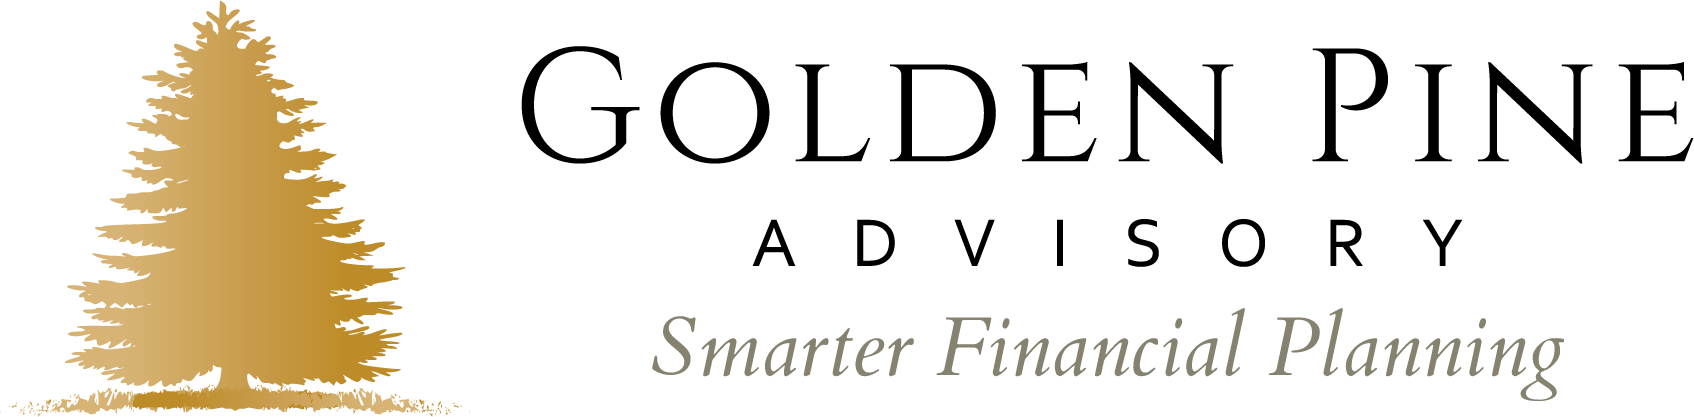 Golden Pine Advisory reviews